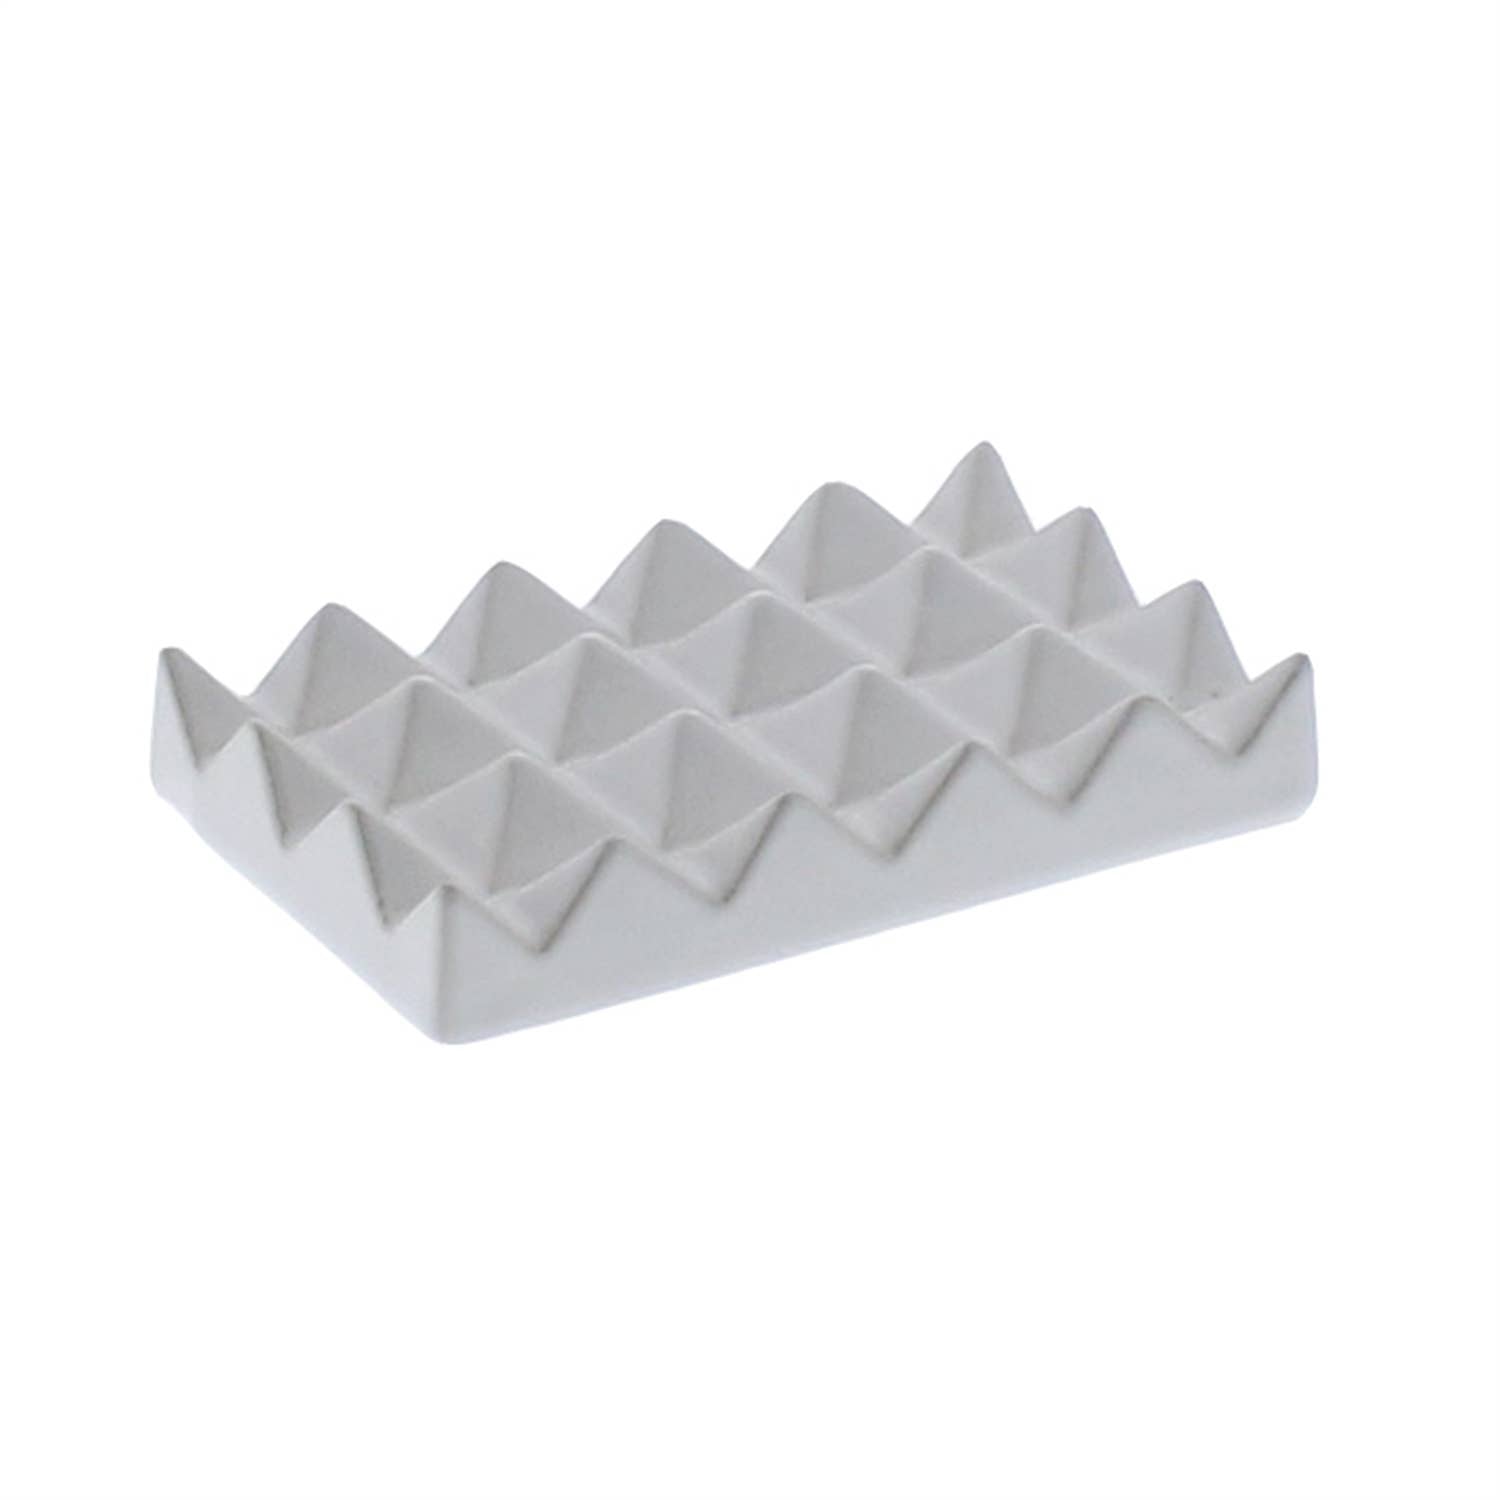 Ceramic Soap Dish - Raised Pyramid, Rectangle - Matte White